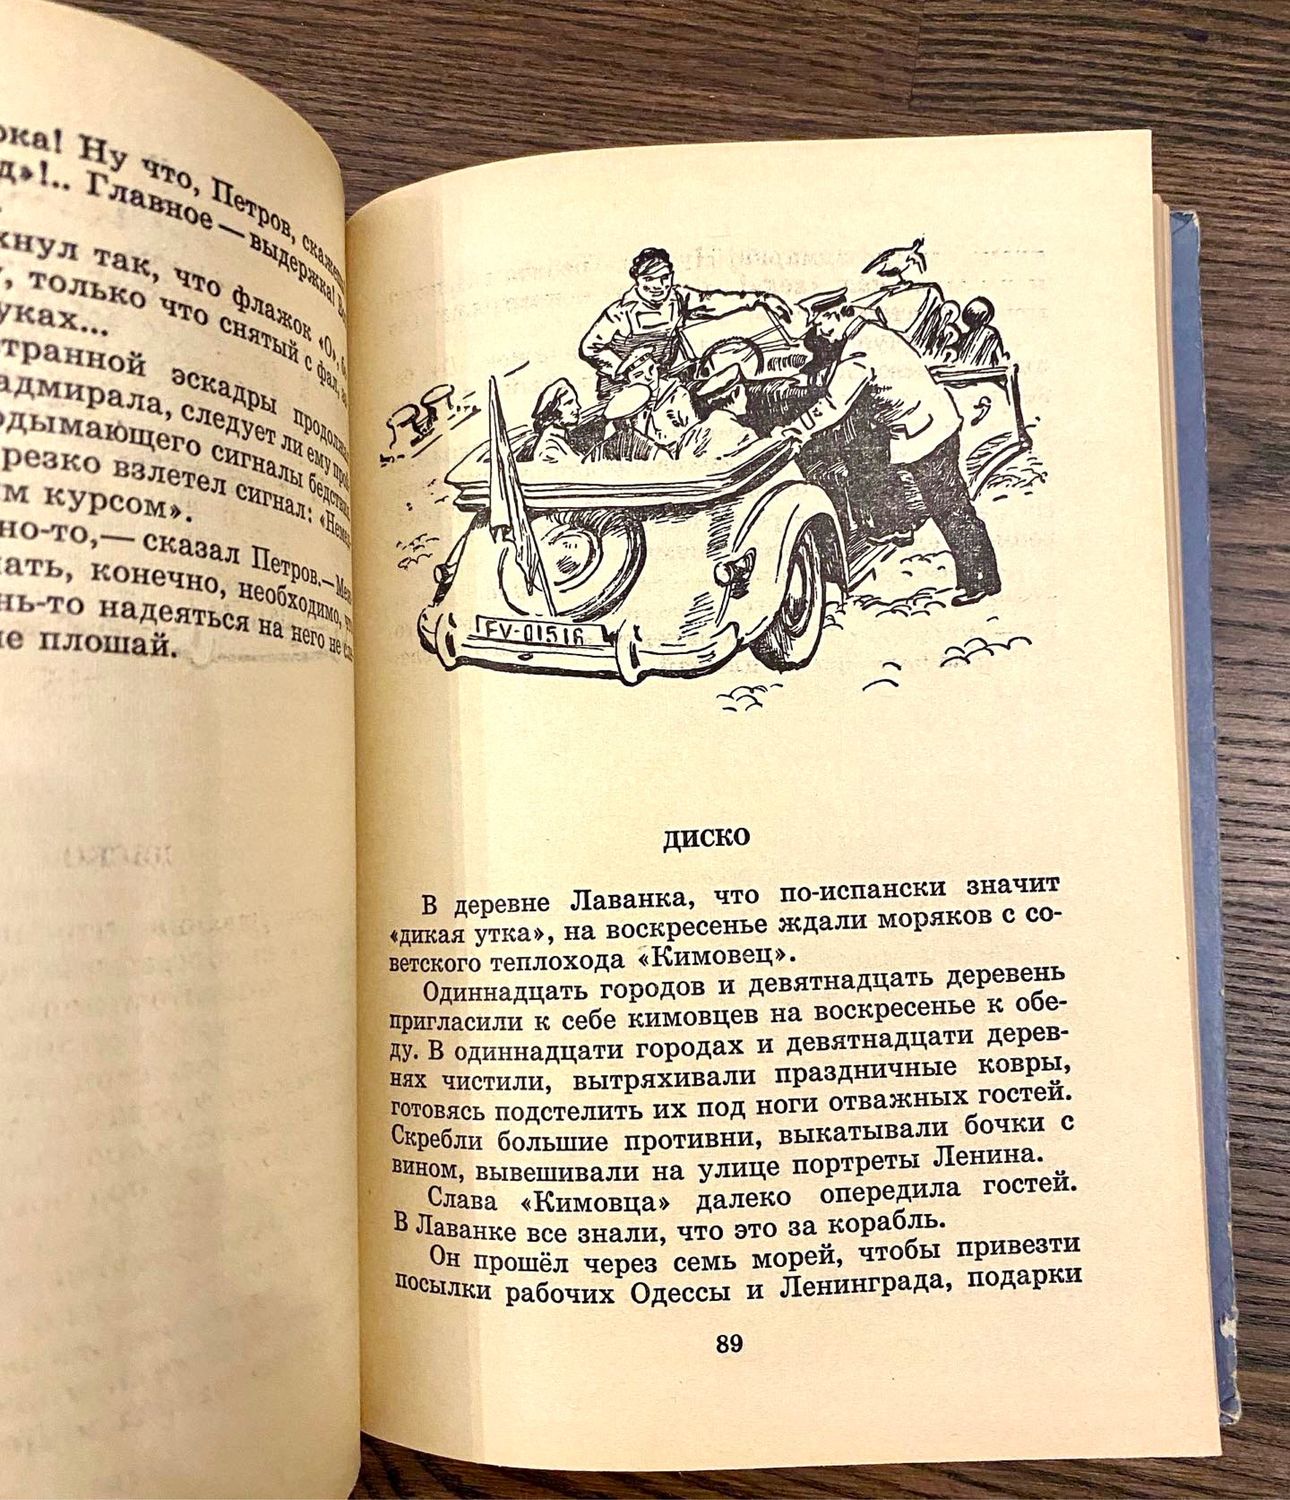 Книга 1971 года. Книги 1971. Магнитка книга 1971. Кассиль и герои произведения ранний Восход.